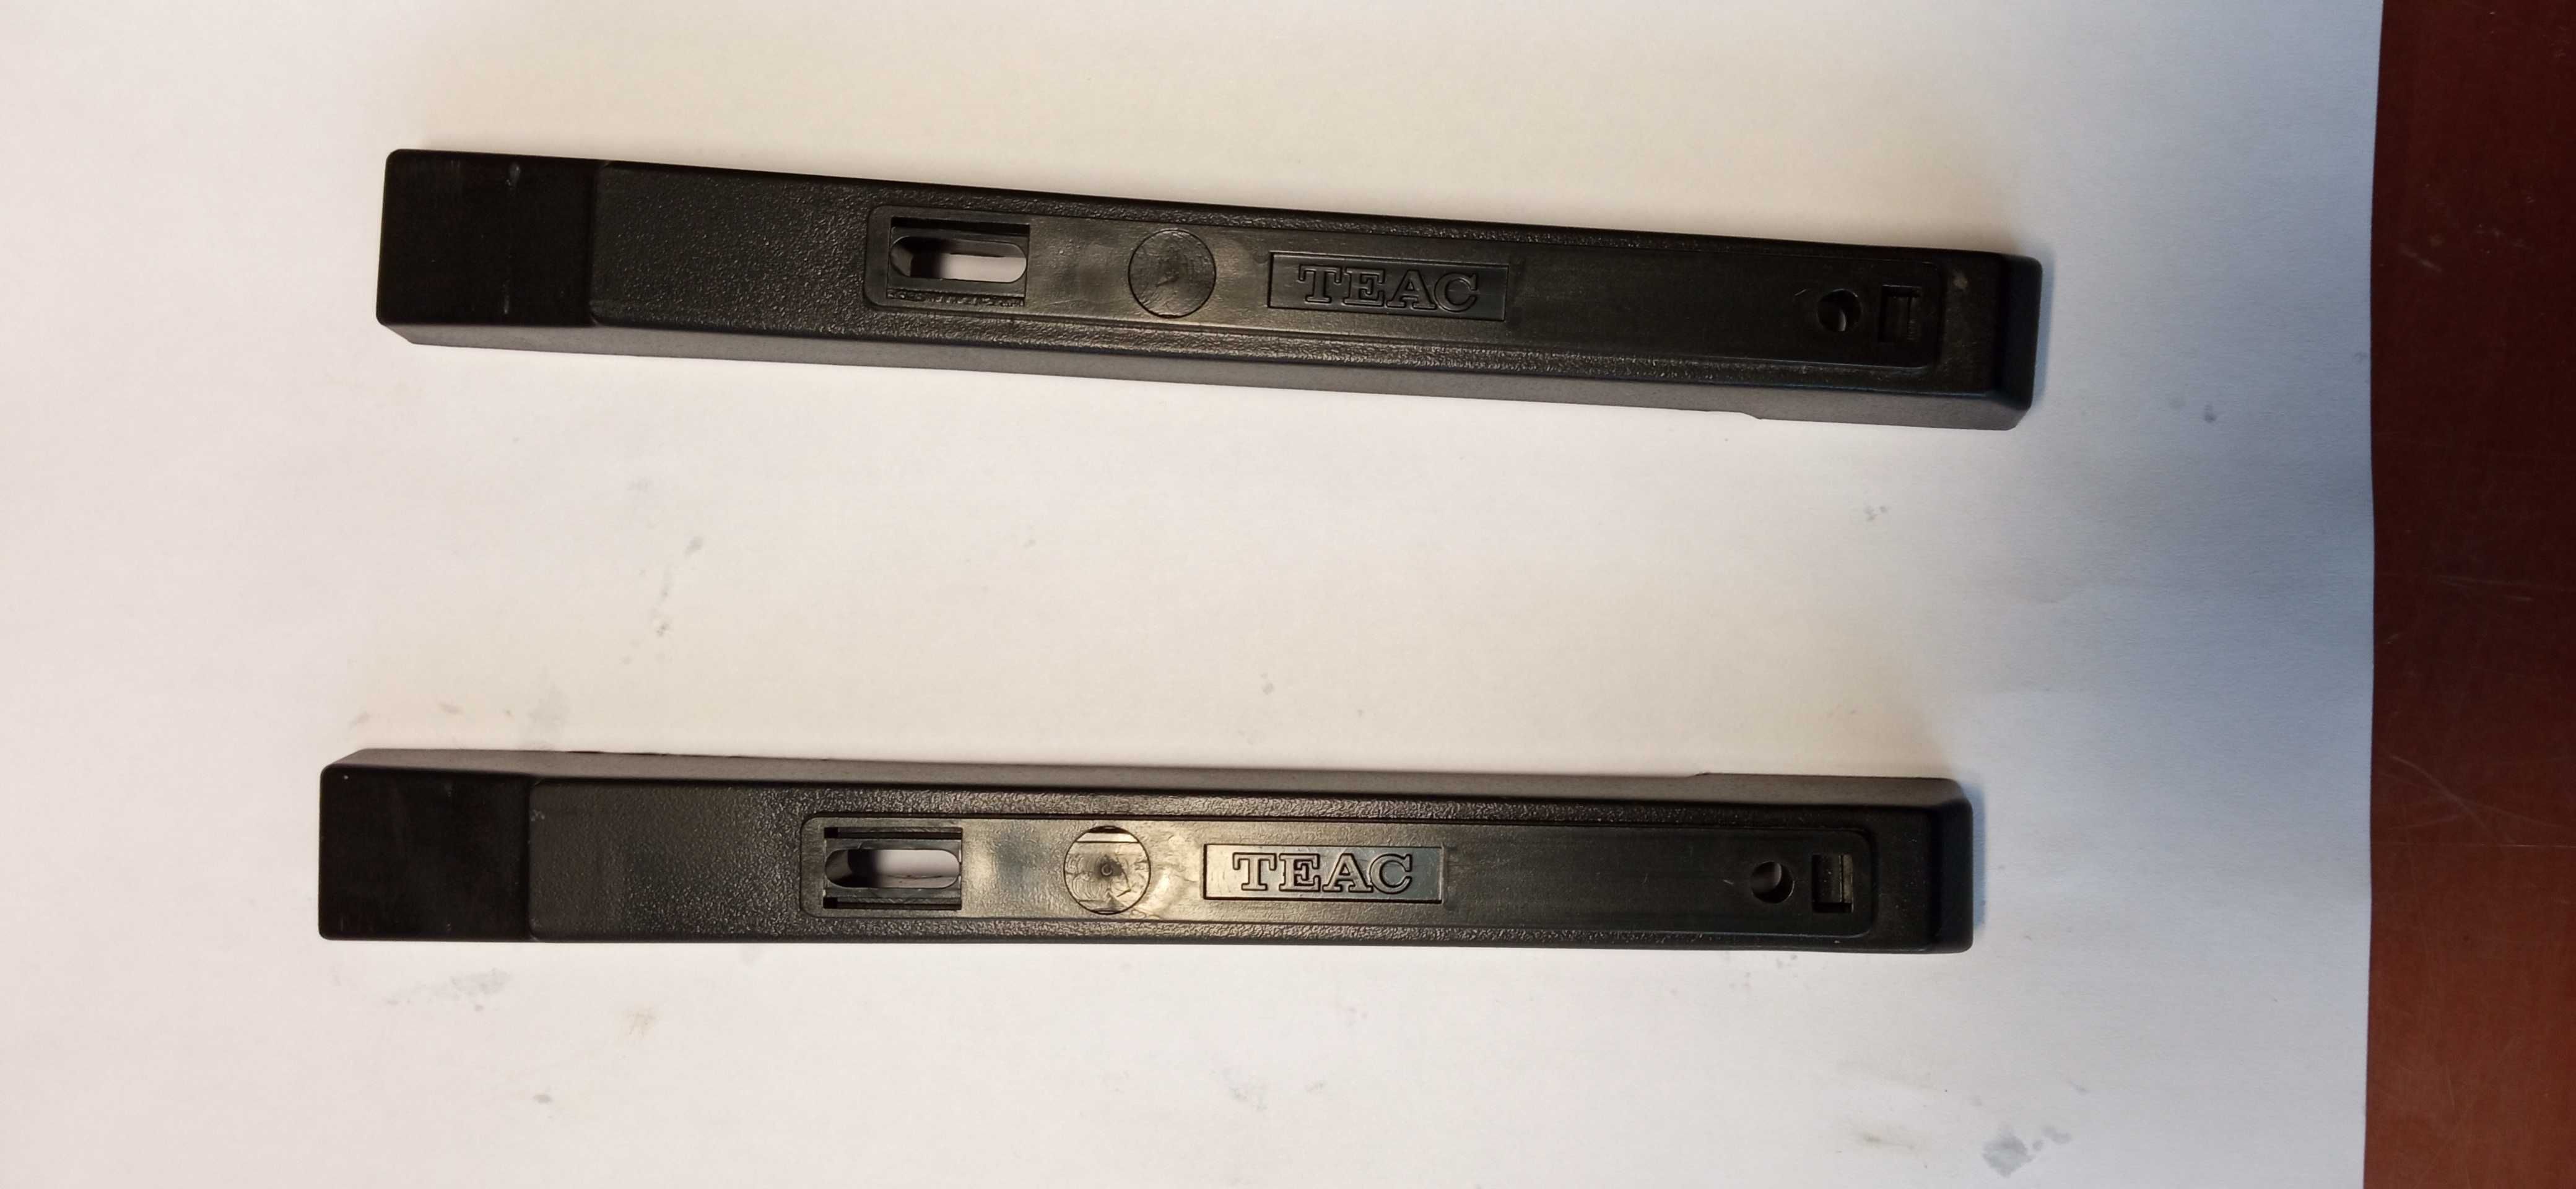 Ножки от магнитофона TEAC- X7, Х10, Х1000 и Х2000. Оригинальные.